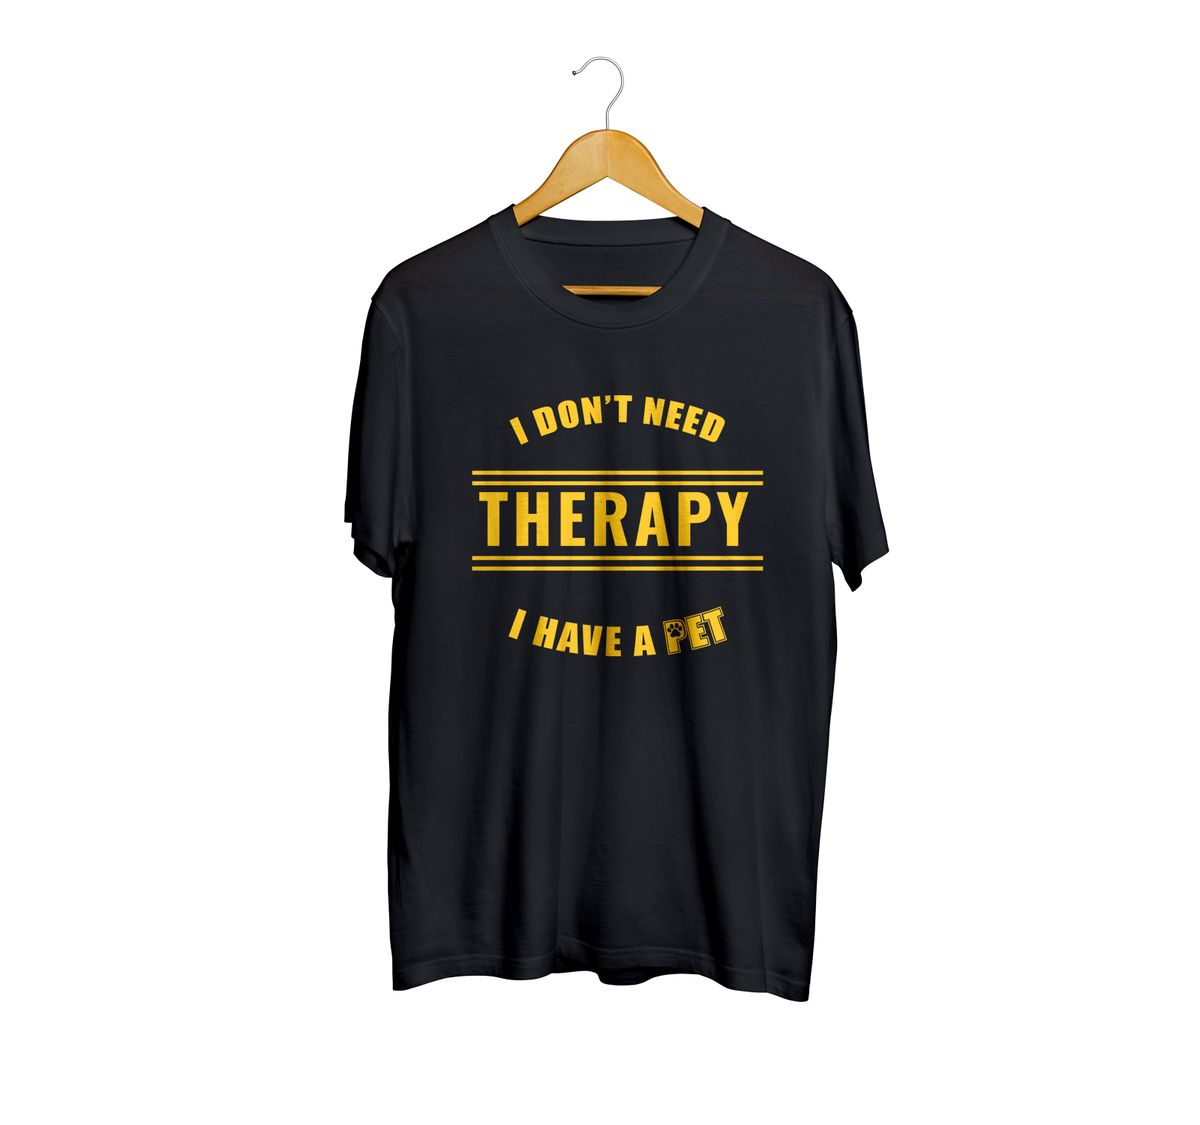 We Love Pets Hub Black Therapy T-Shirt image 1